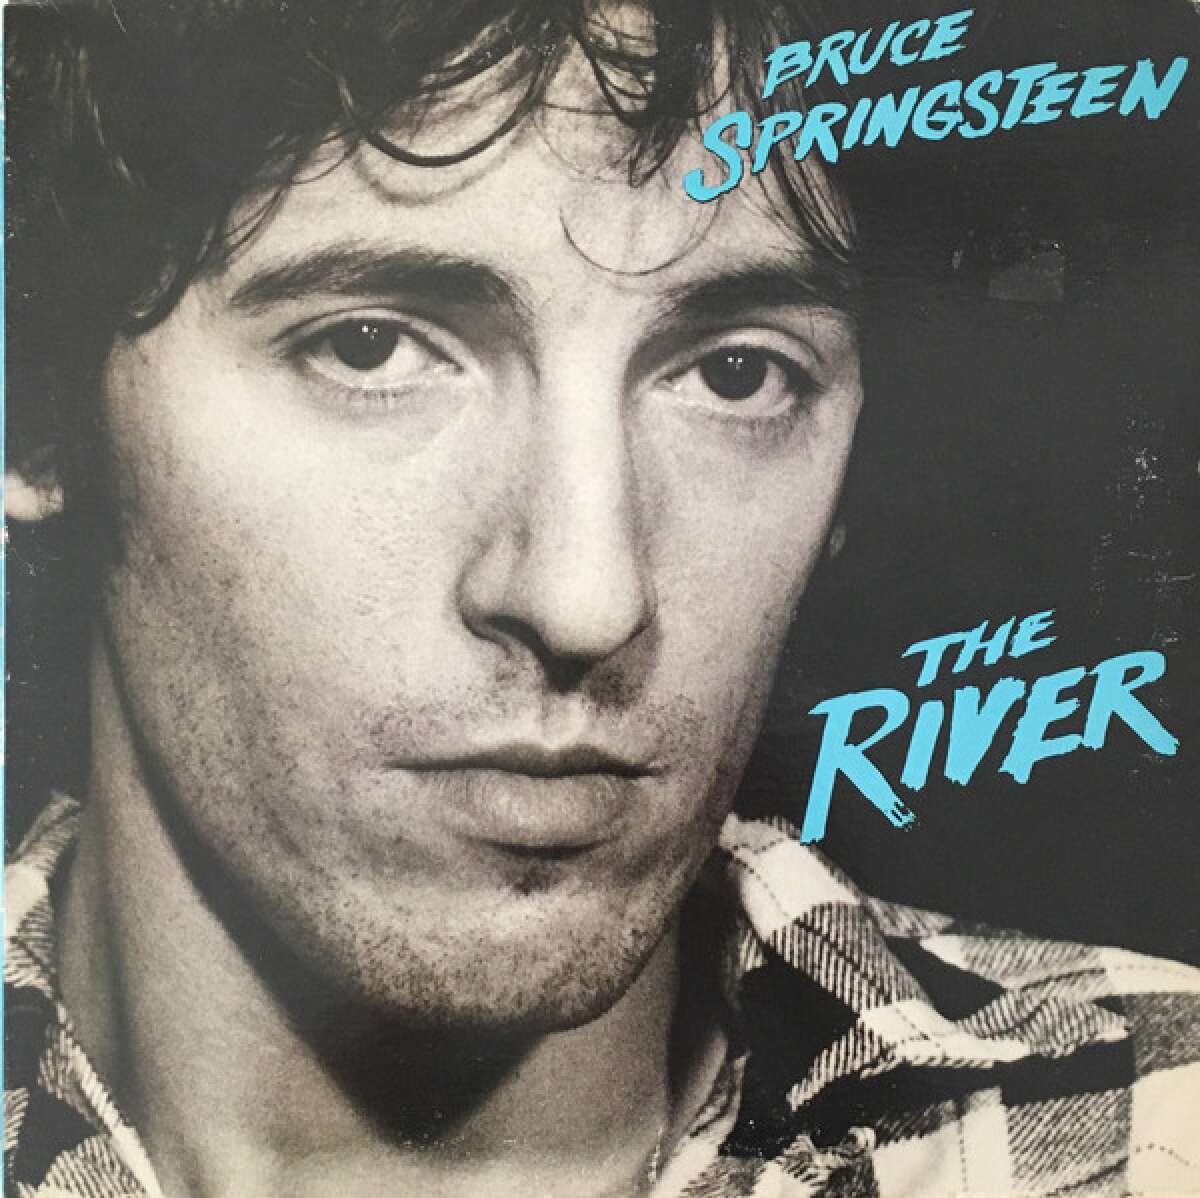 Bruce Springsteen Album: The River